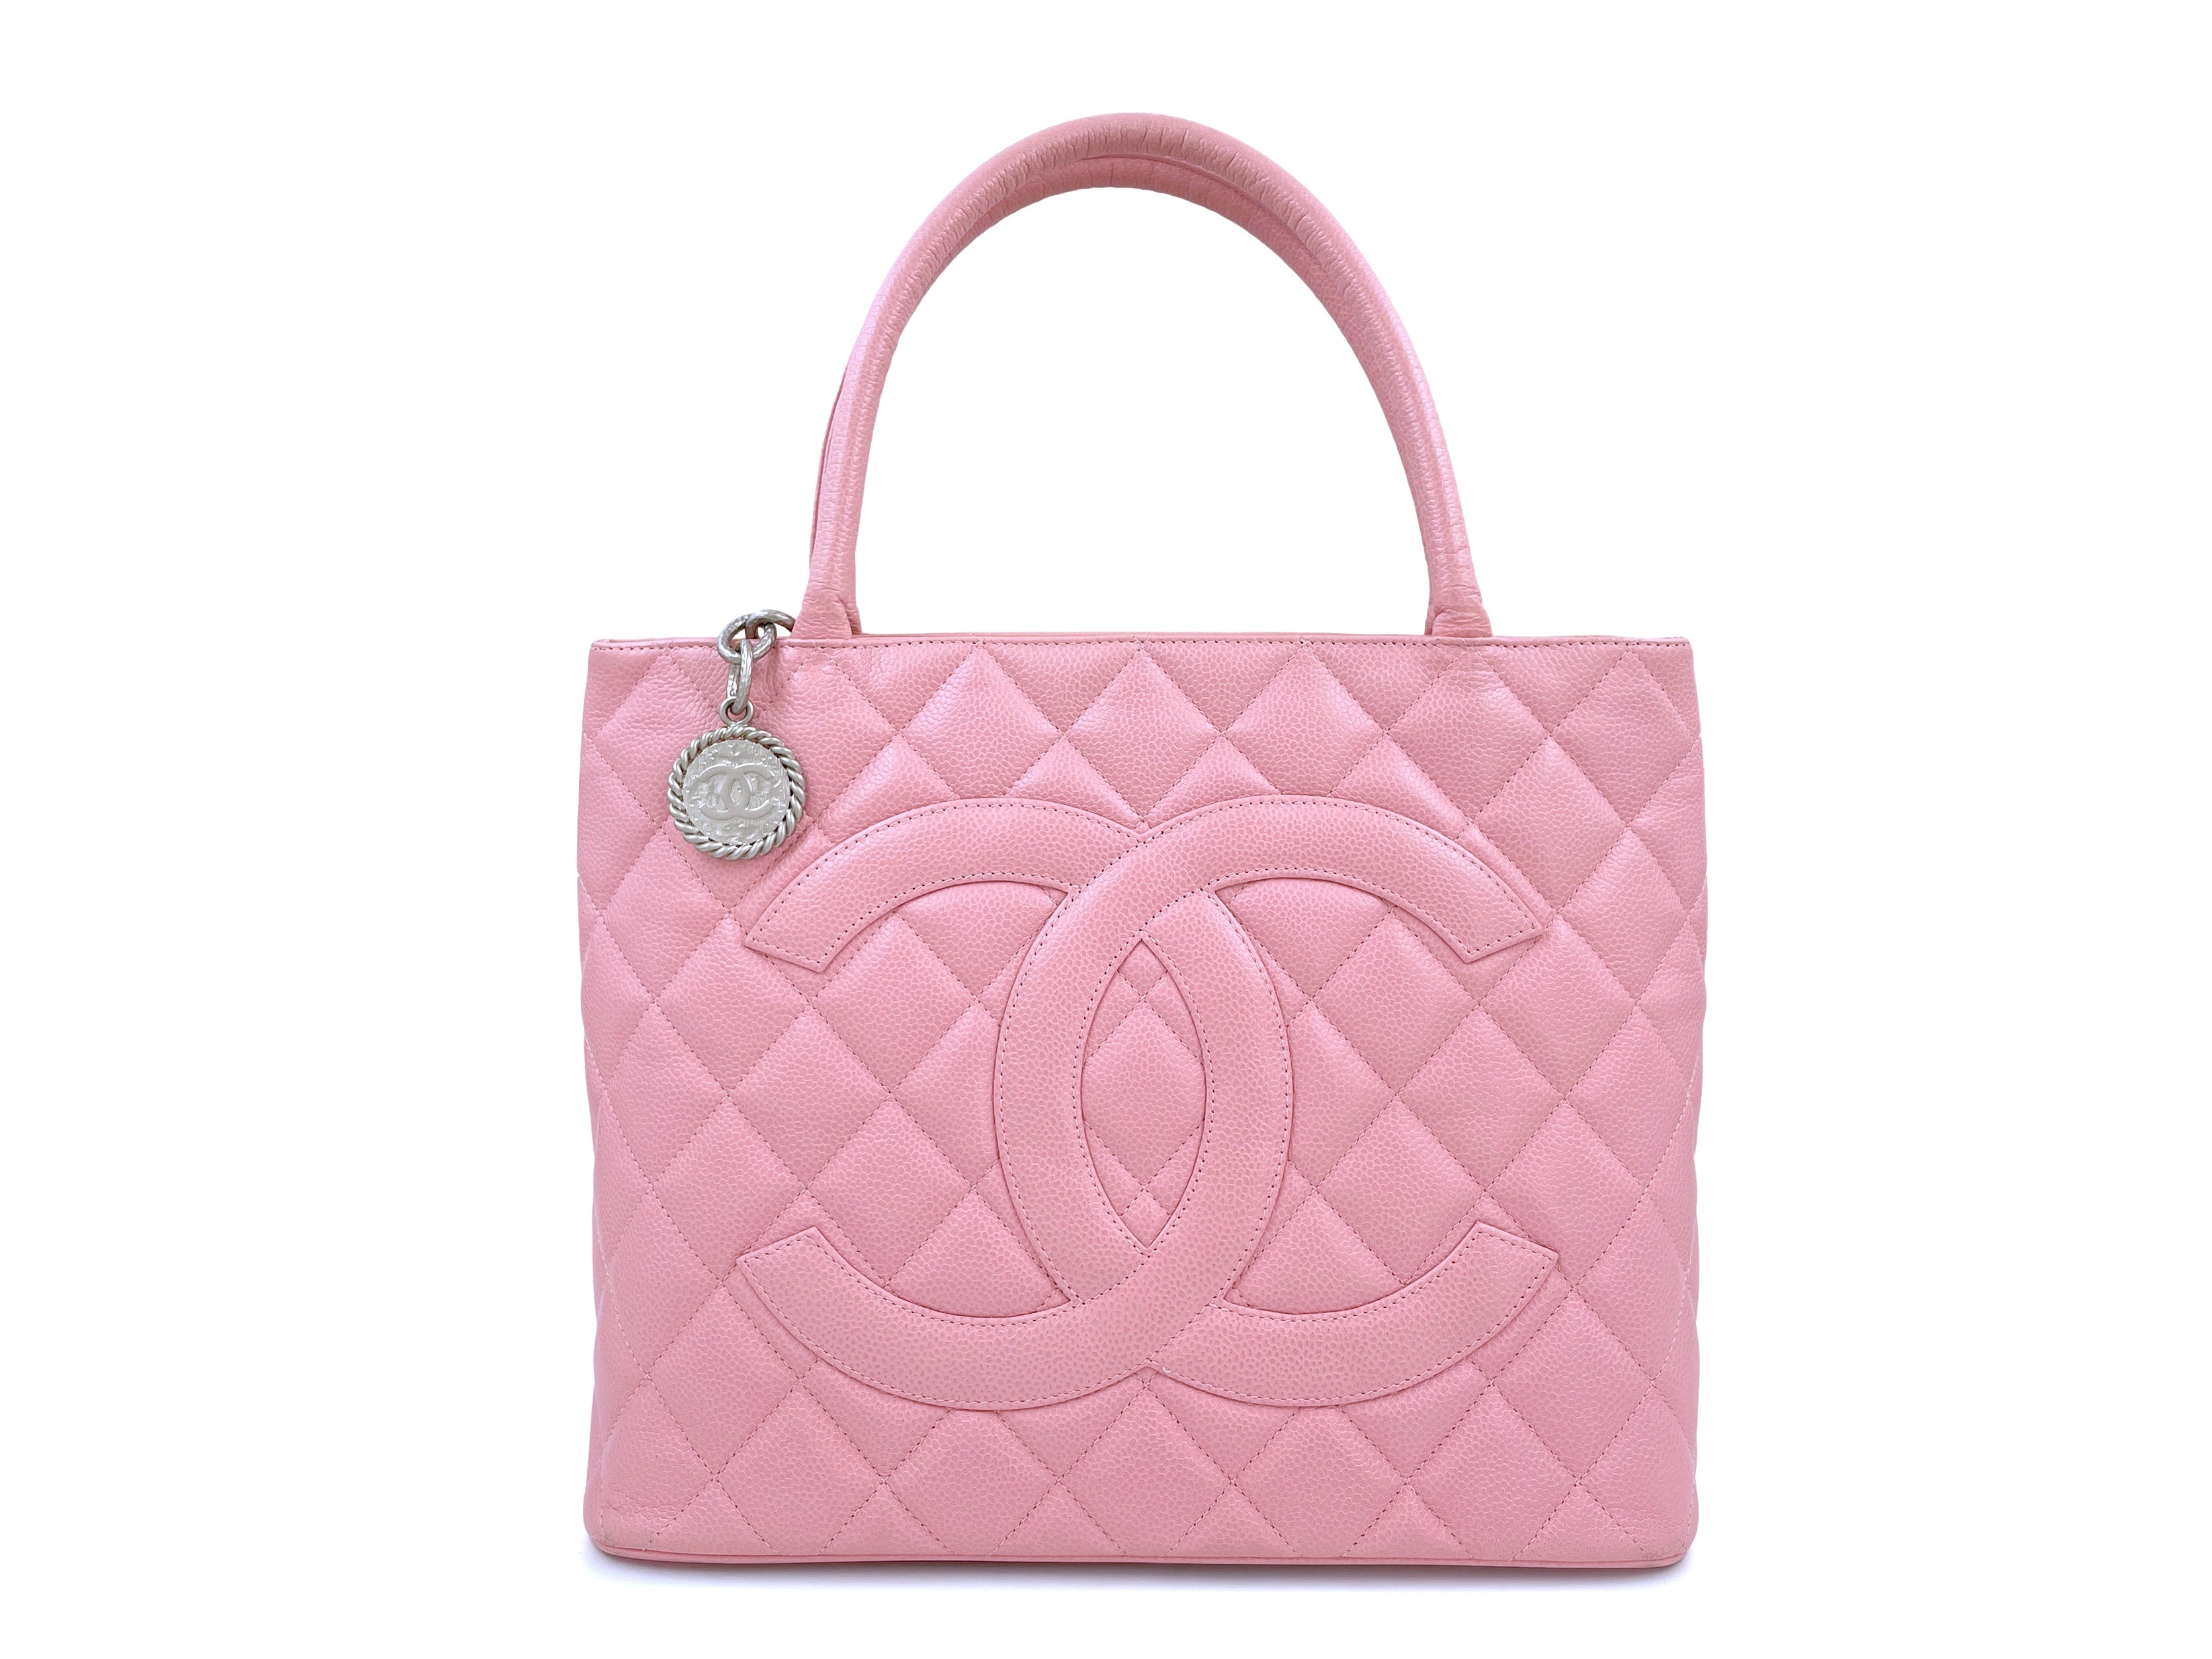 Chanel Camellia Bag - 83 For Sale on 1stDibs